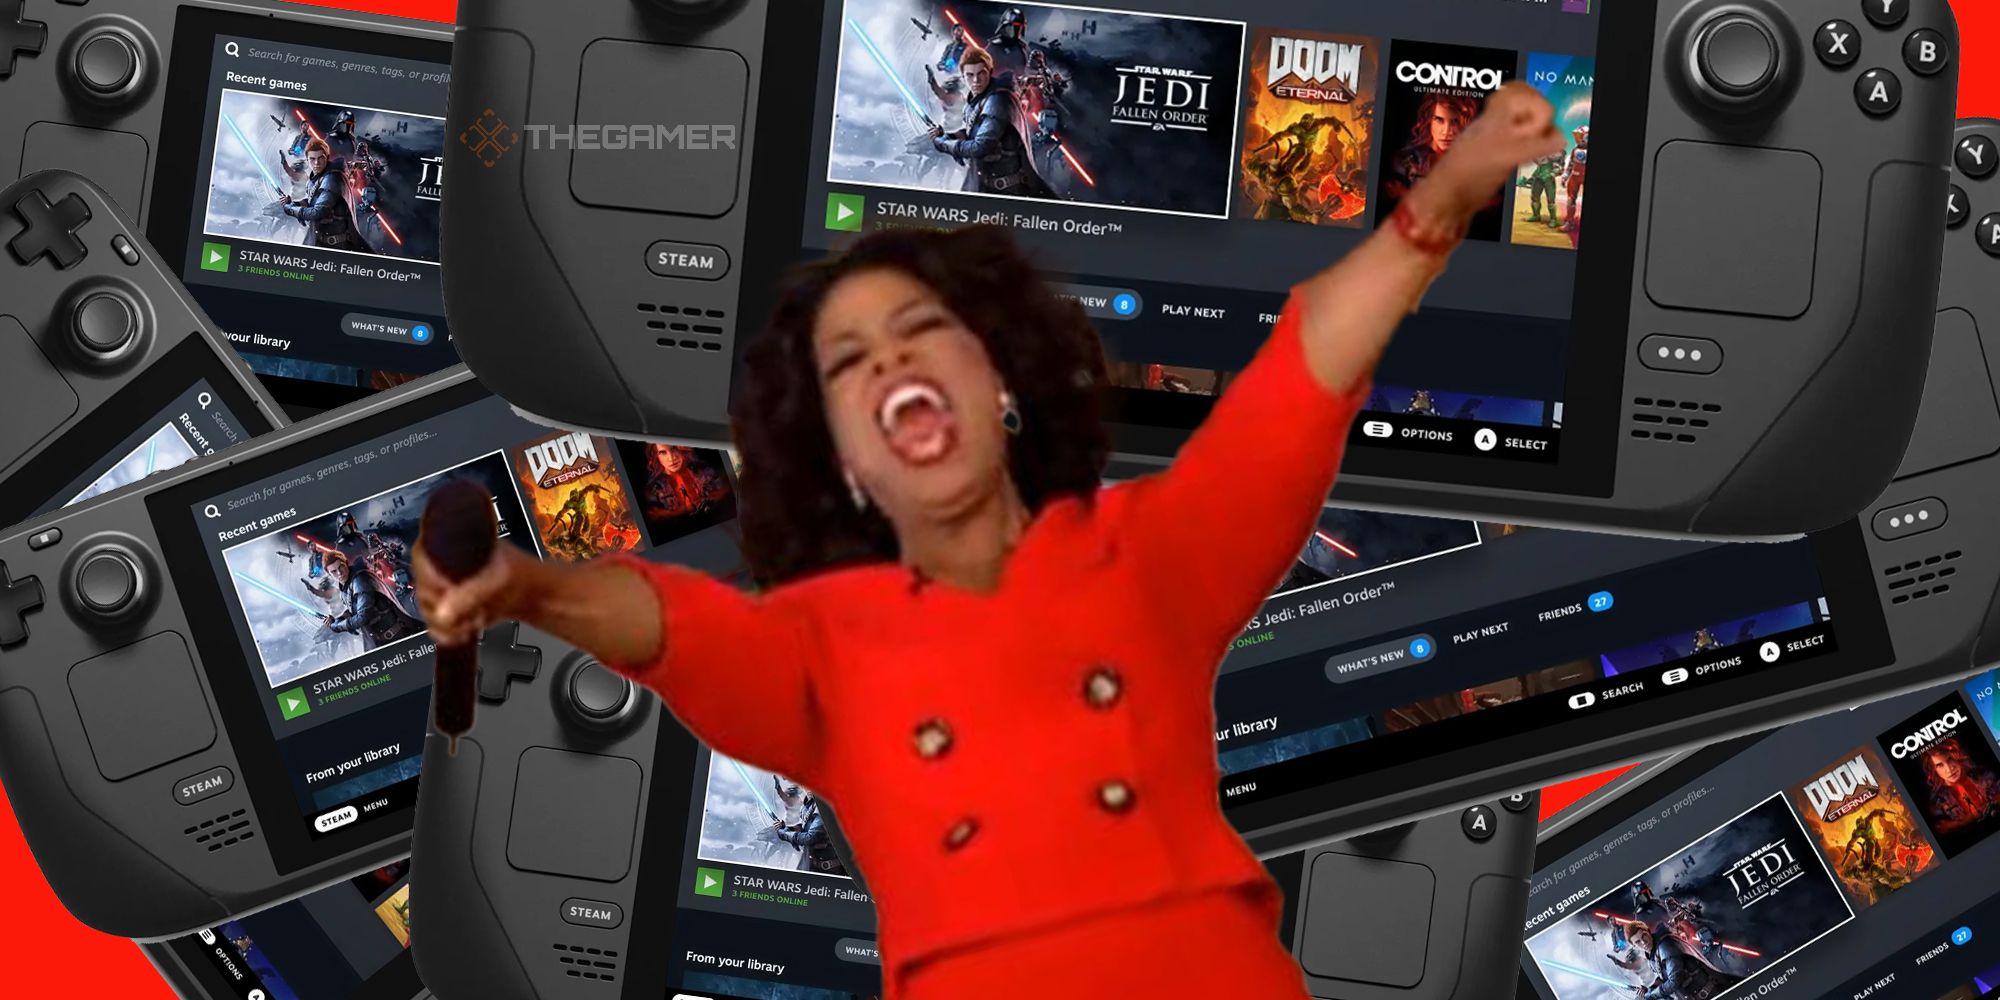 Valve celebrates Steam Deck's 1-year anniversary with 10% discount - Neowin